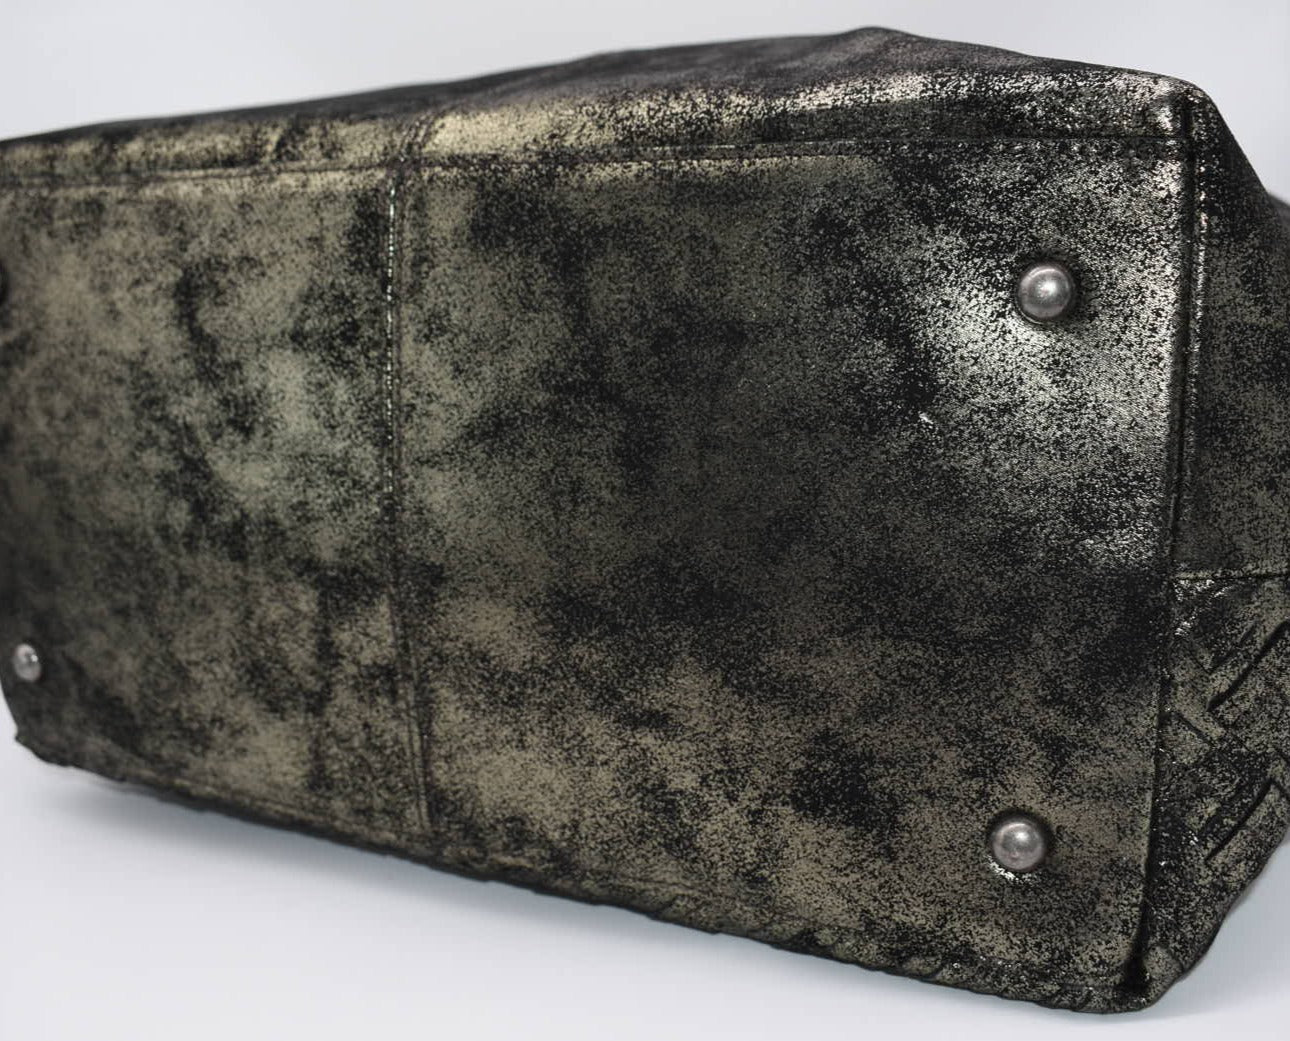 Patricia Nash Tote Bag in Woven Metallic Gold & Black